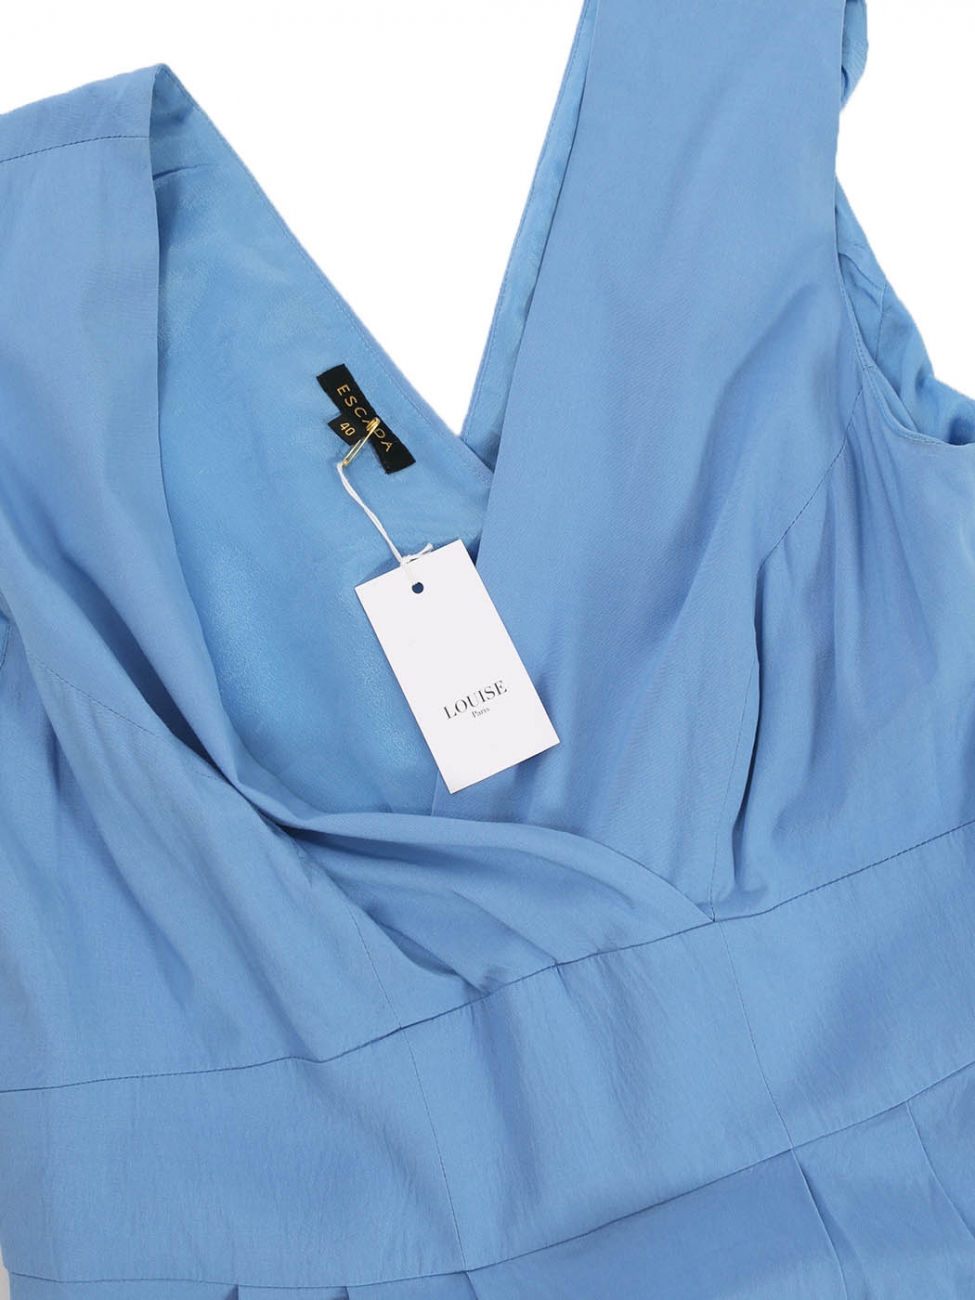 Boutique €1300 ESCADA strap satin blue V 40/42 Light dress price Size large neckline Retail